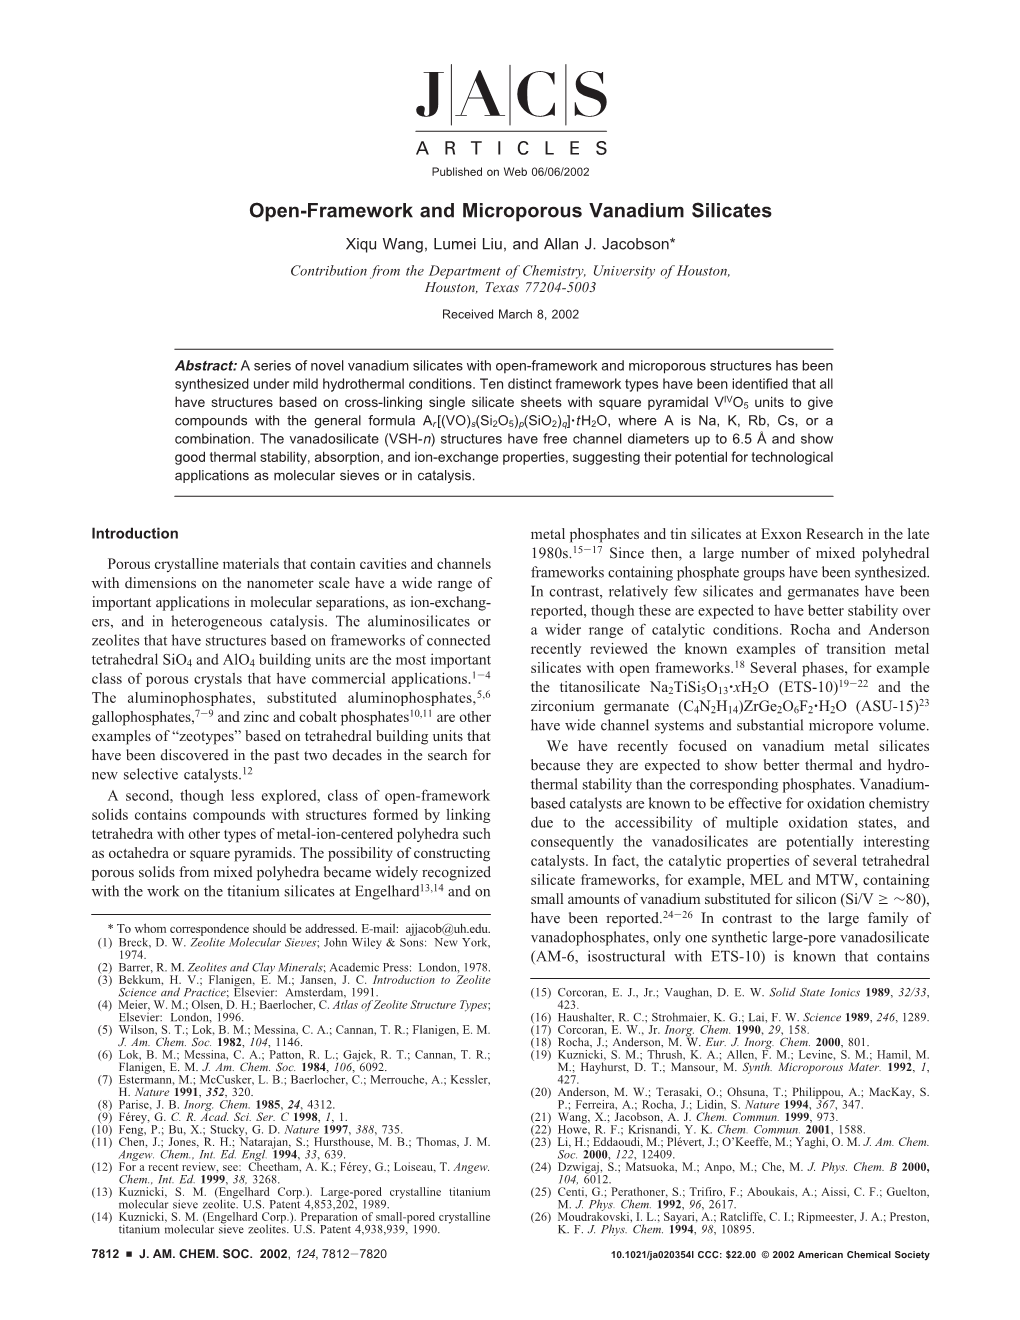 Open-Framework and Microporous Vanadium Silicates Xiqu Wang, Lumei Liu, and Allan J